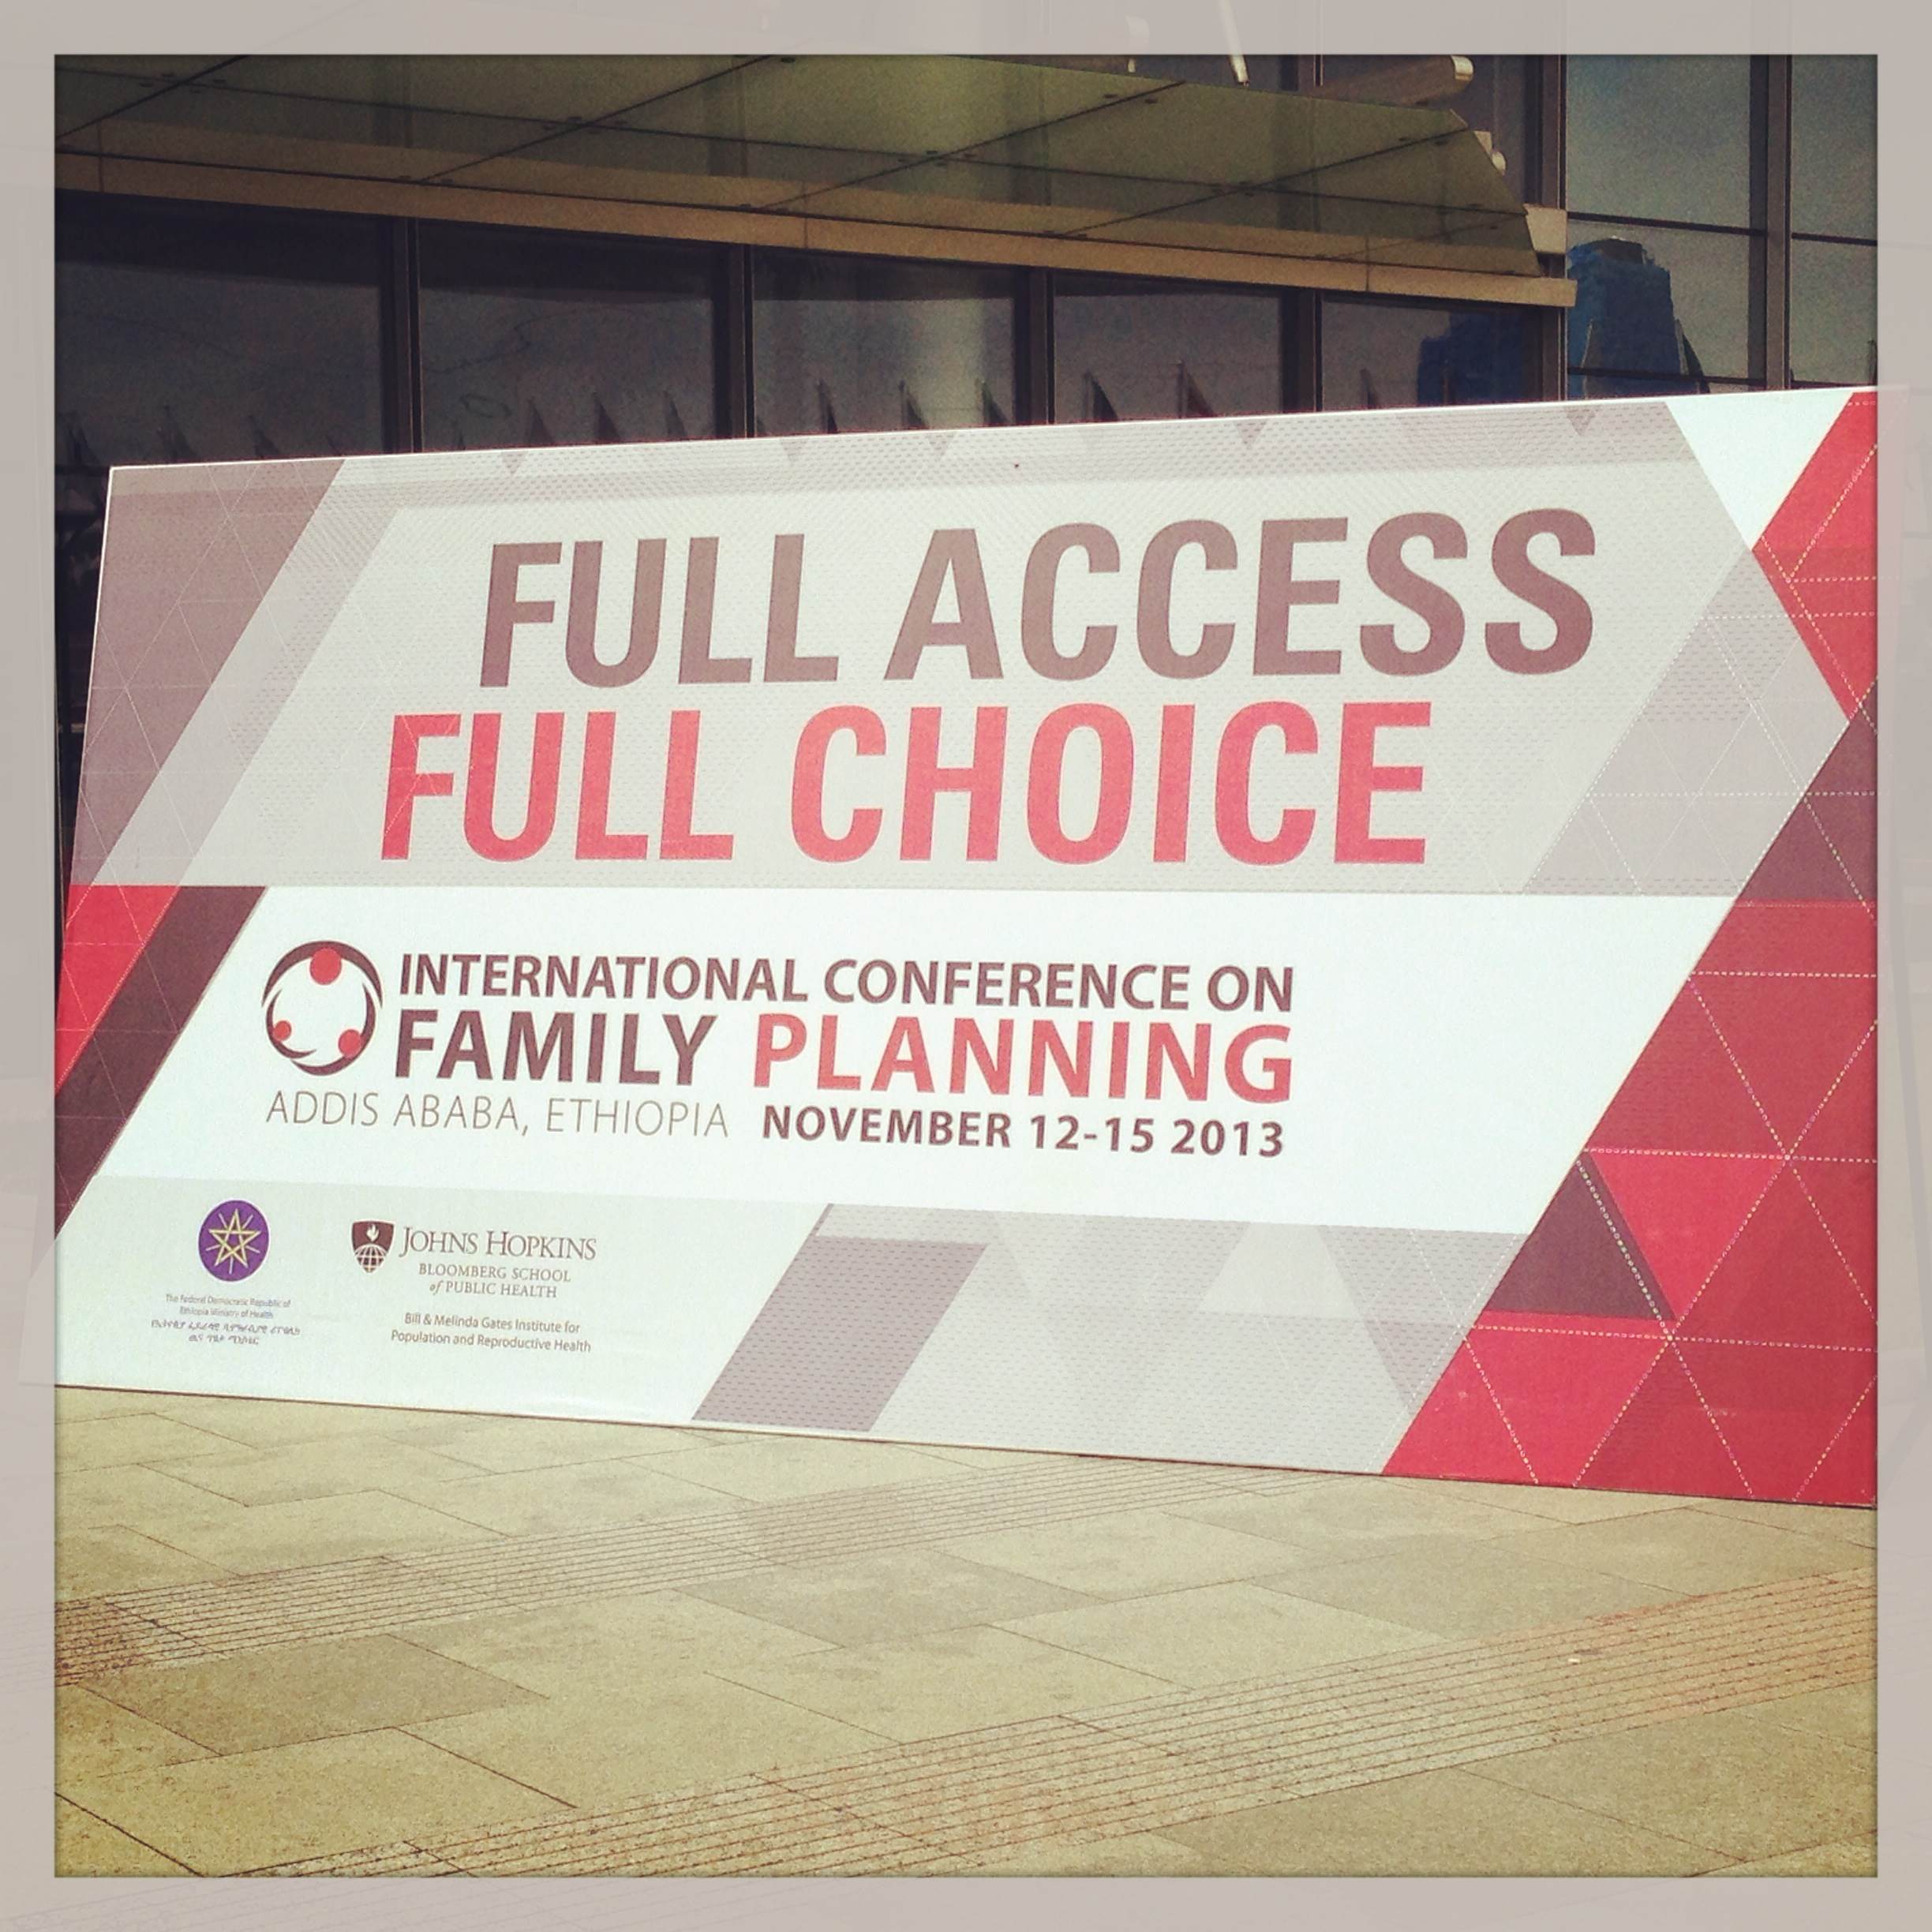 ICFP Theme - "Full Access, Full Choice"